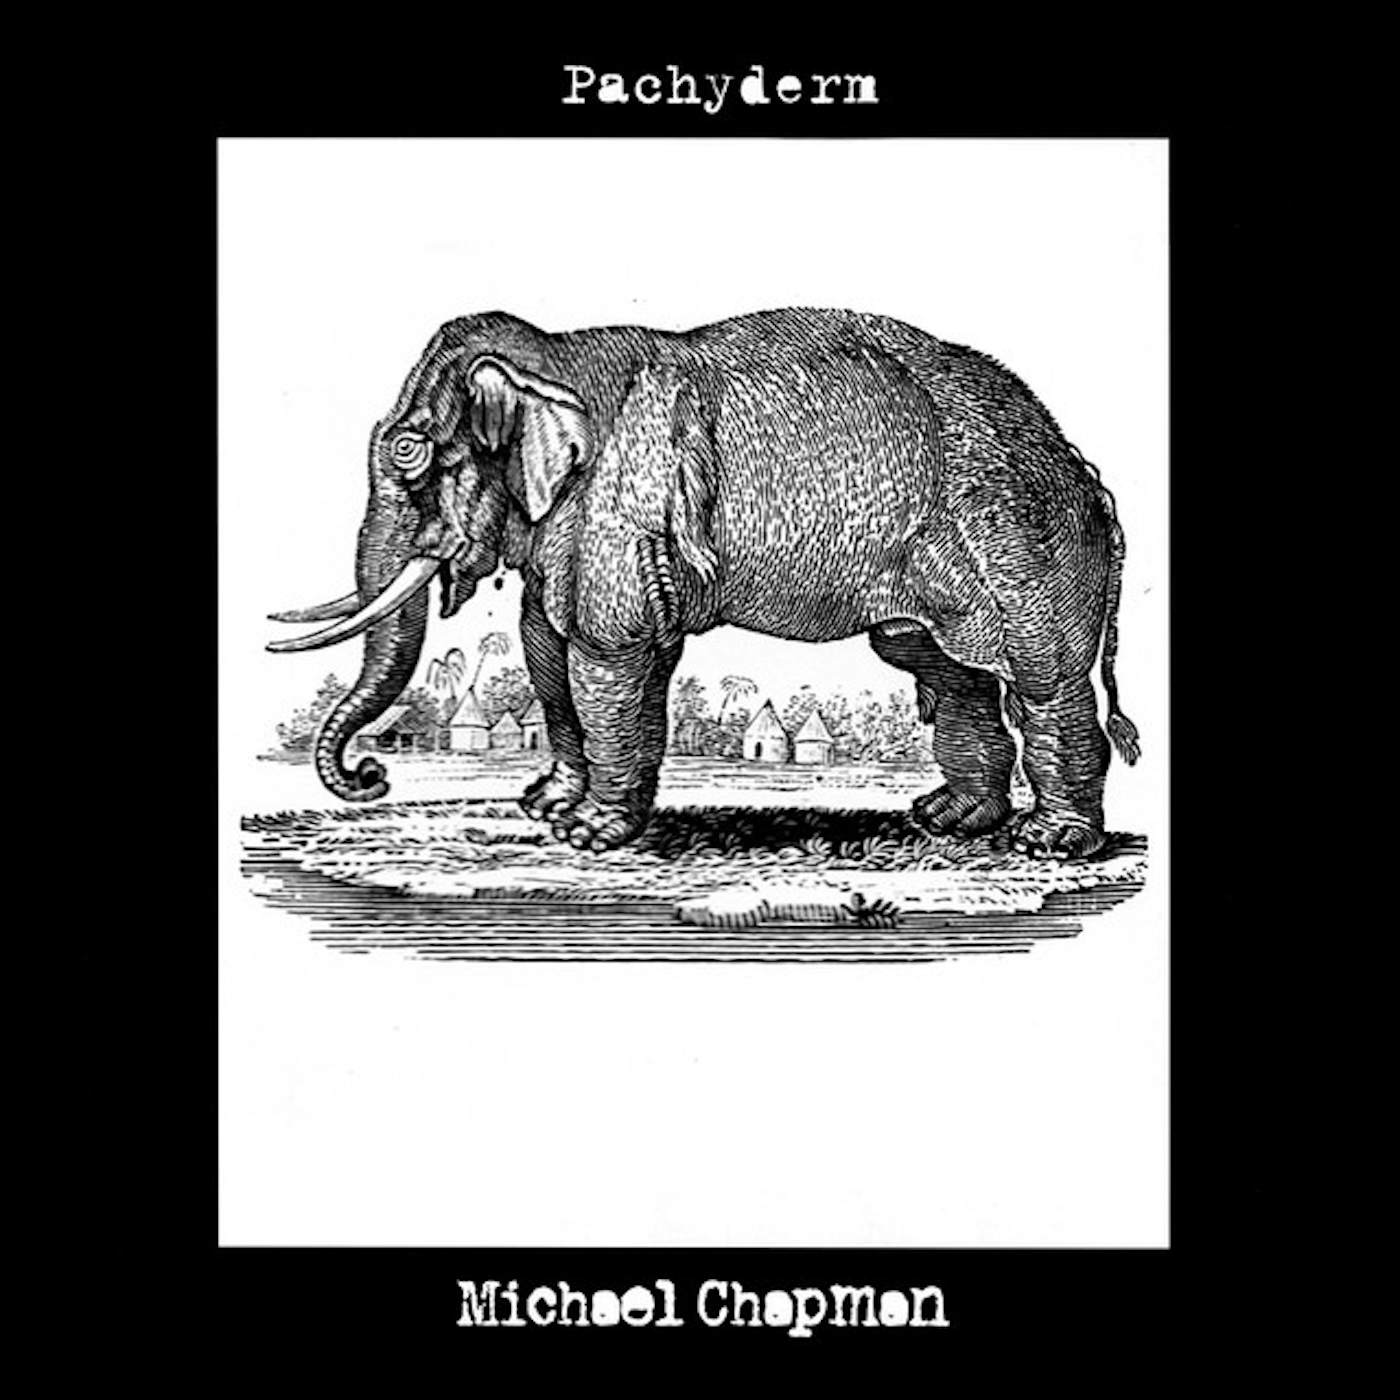 Michael Chapman Pachyderm Vinyl Record